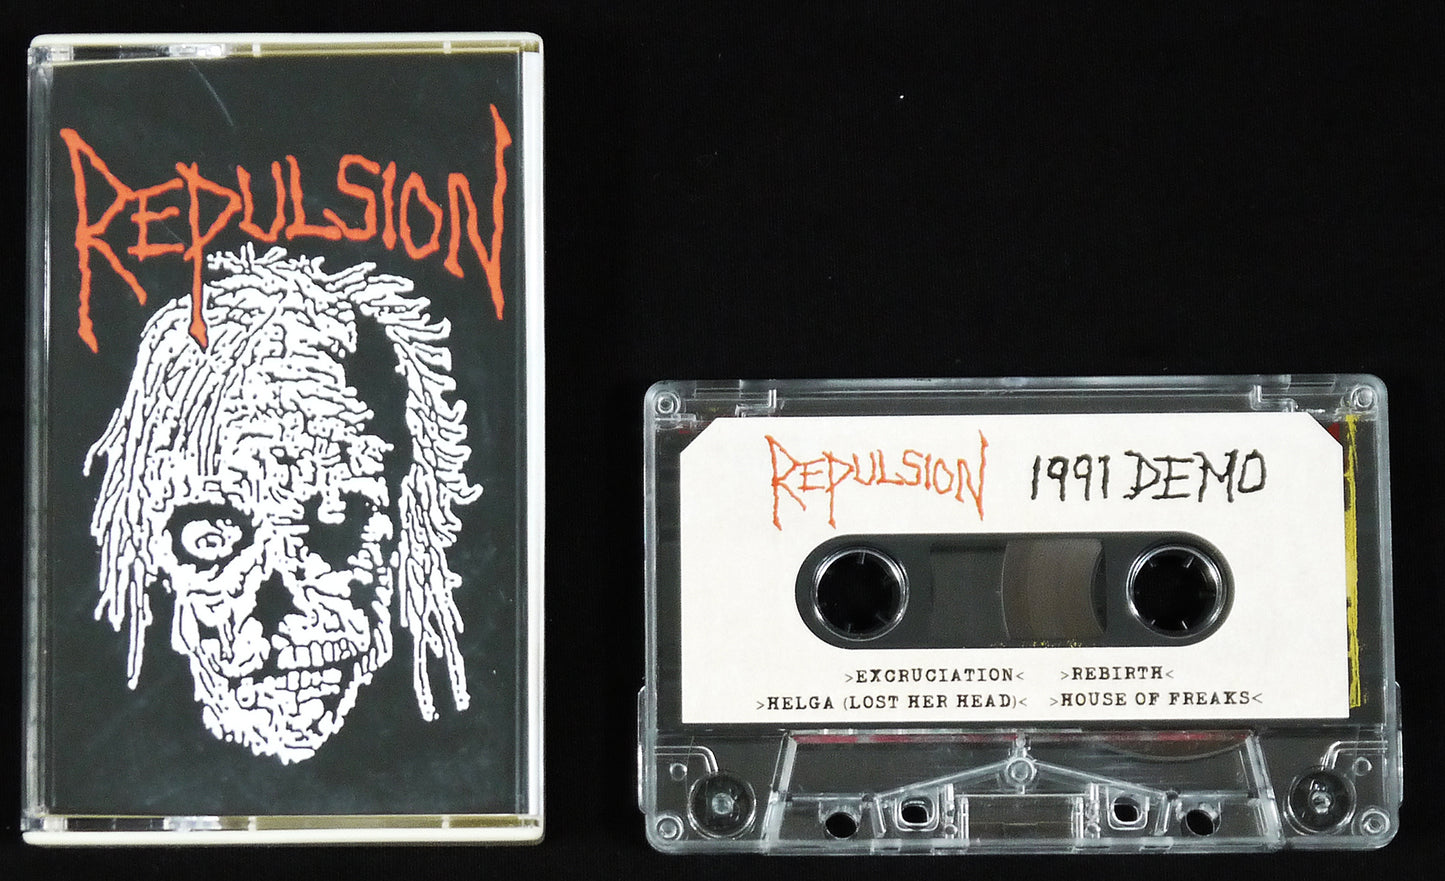 REPULSION - Slaughter Of The Innocent/Demo 1991 MC Tape